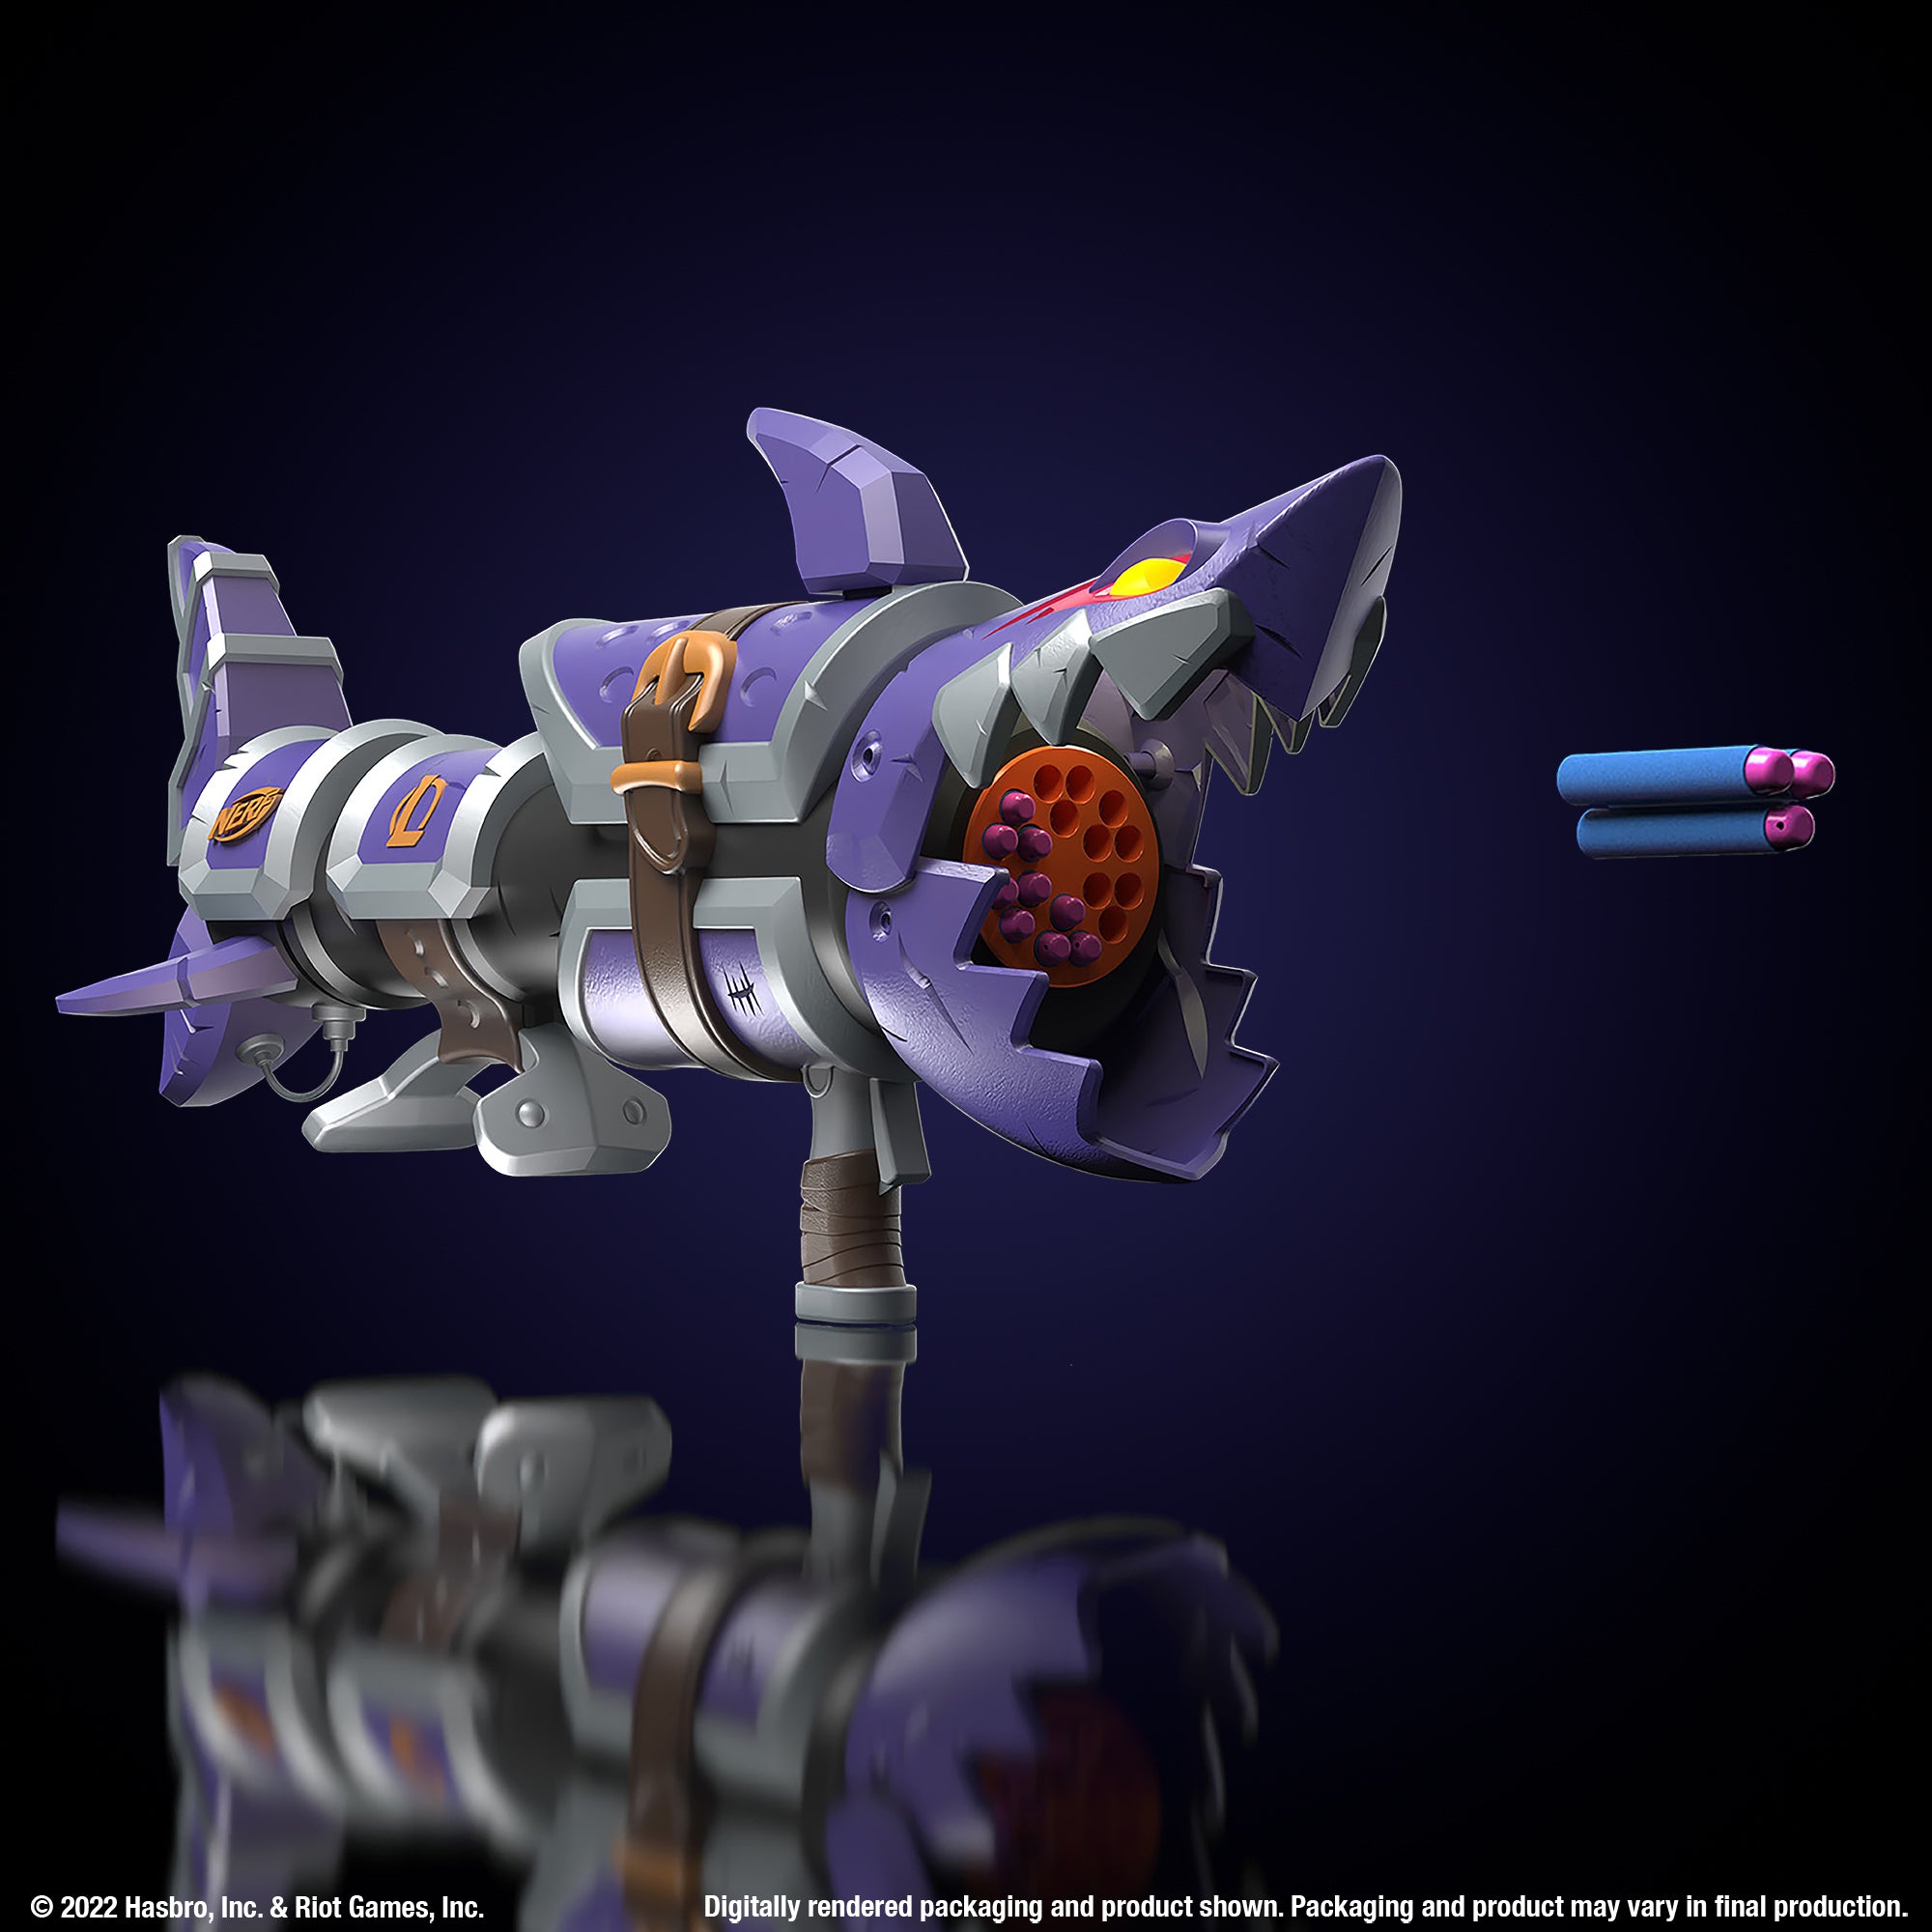 Nerf LMTD League of Legends Jinx Fishbones Blaster